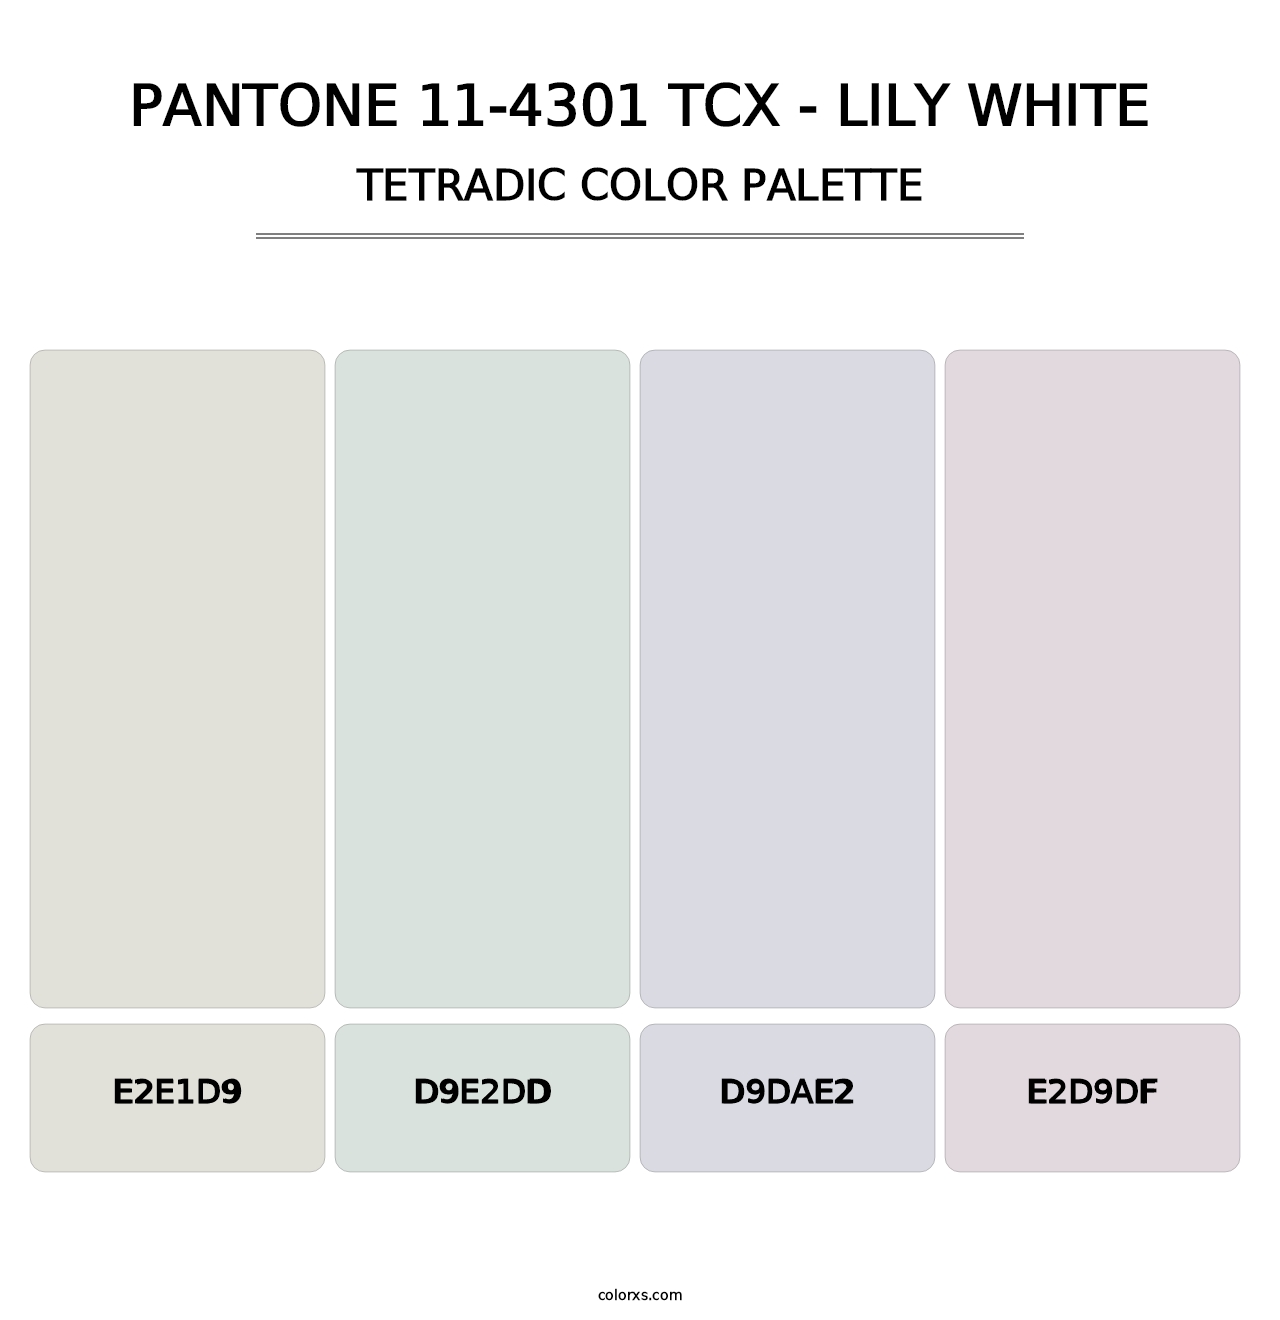 PANTONE 11-4301 TCX - Lily White - Tetradic Color Palette